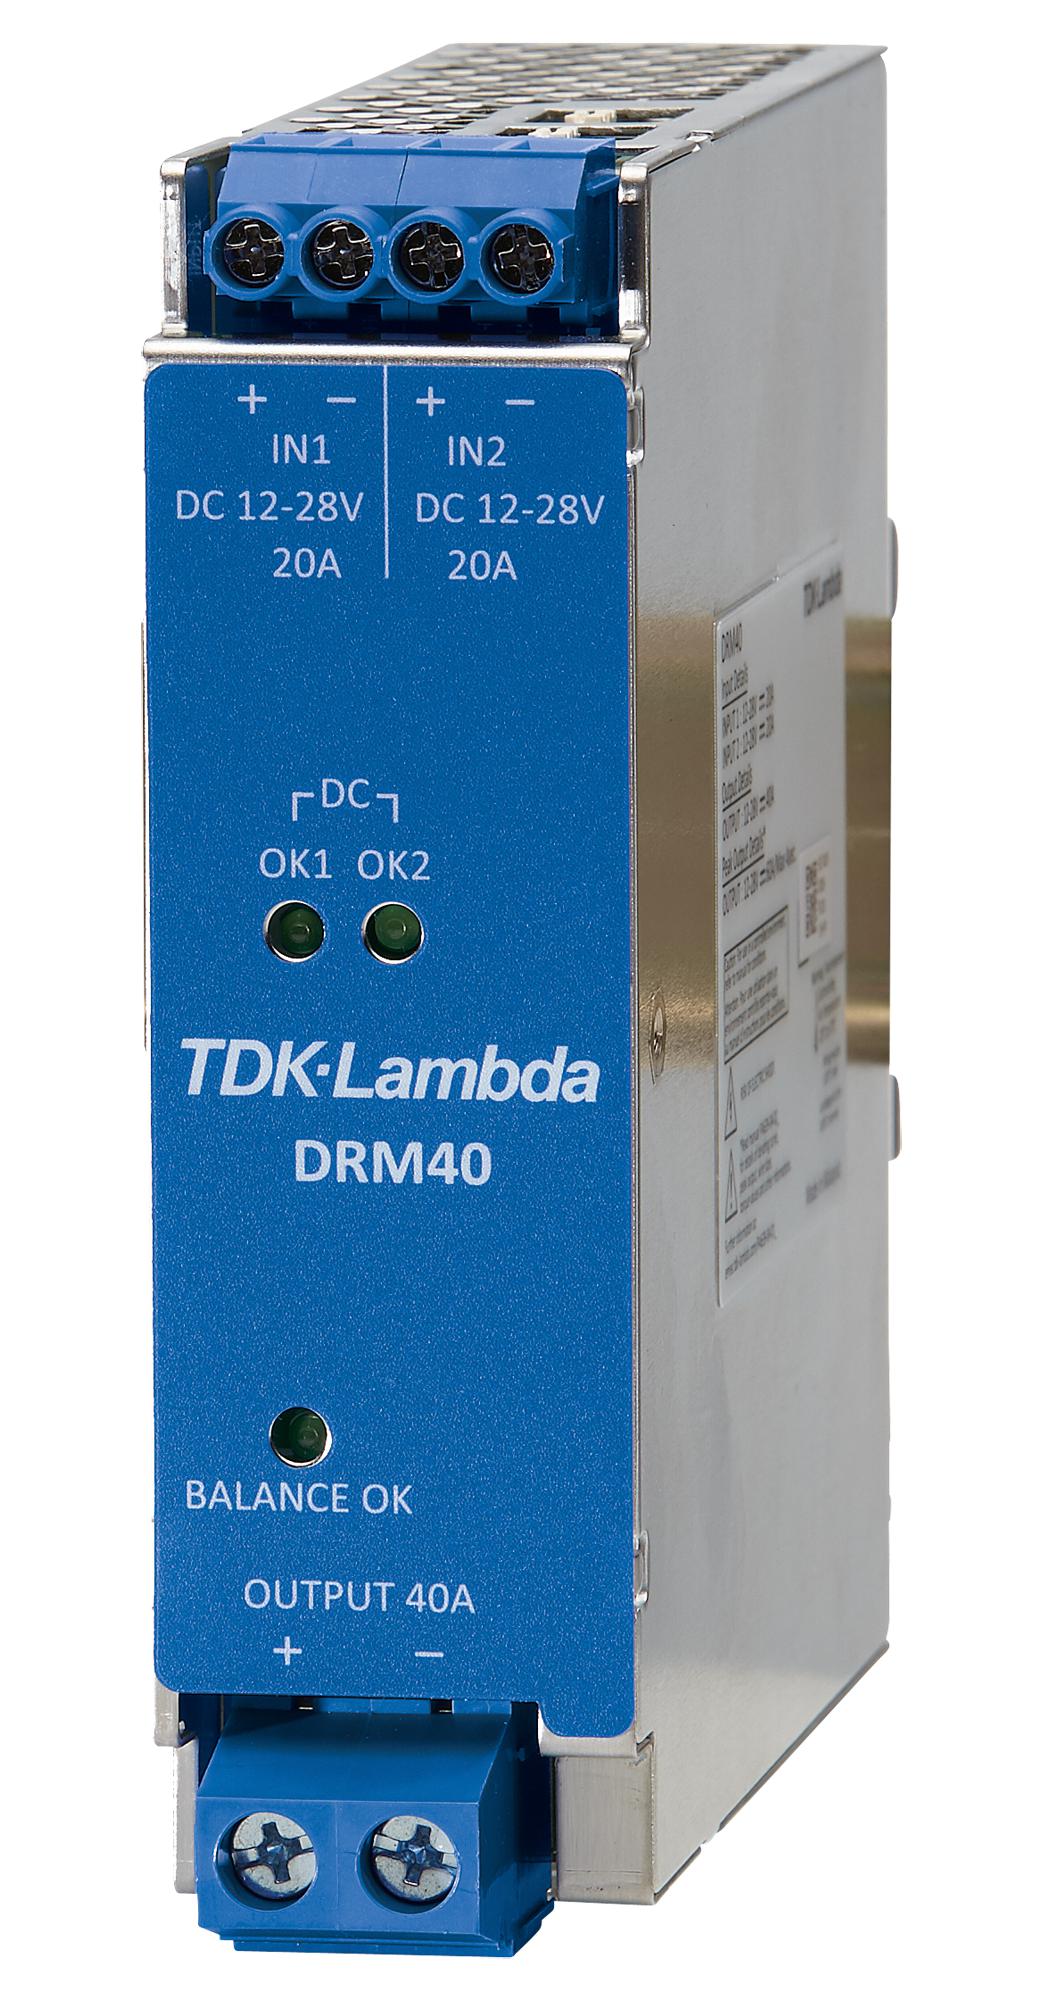 DRM-40 DIN RAIL REDUNDANCY MODULE, POWER SUPPLY TDK-LAMBDA